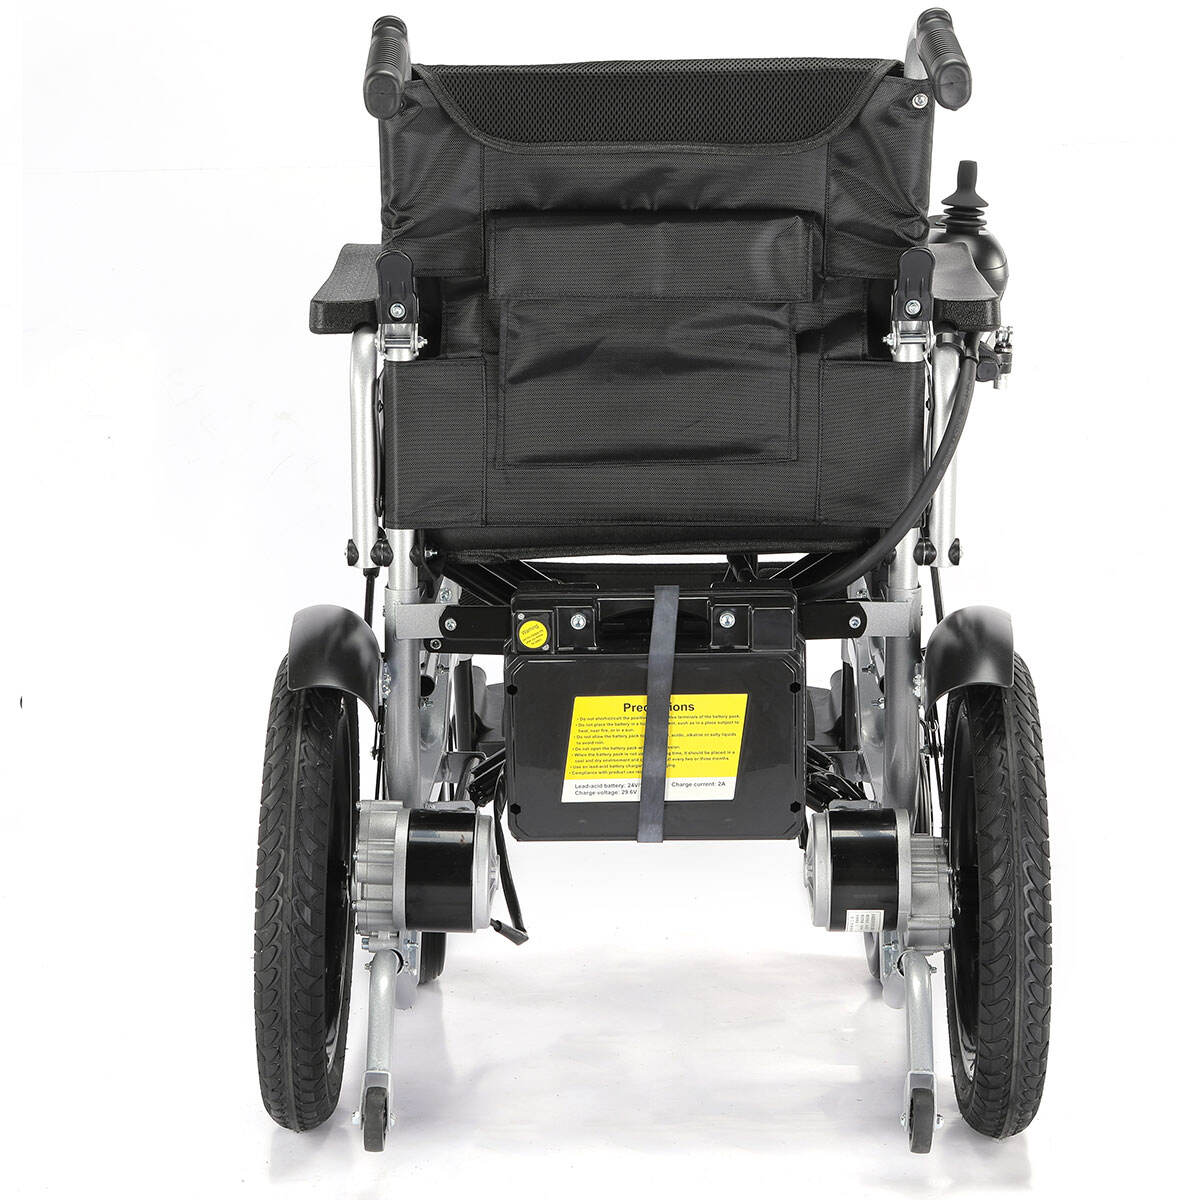 BC-ES600102 Alloy rear wheel Cheap Wholesale Electric Foldable Wheelchair